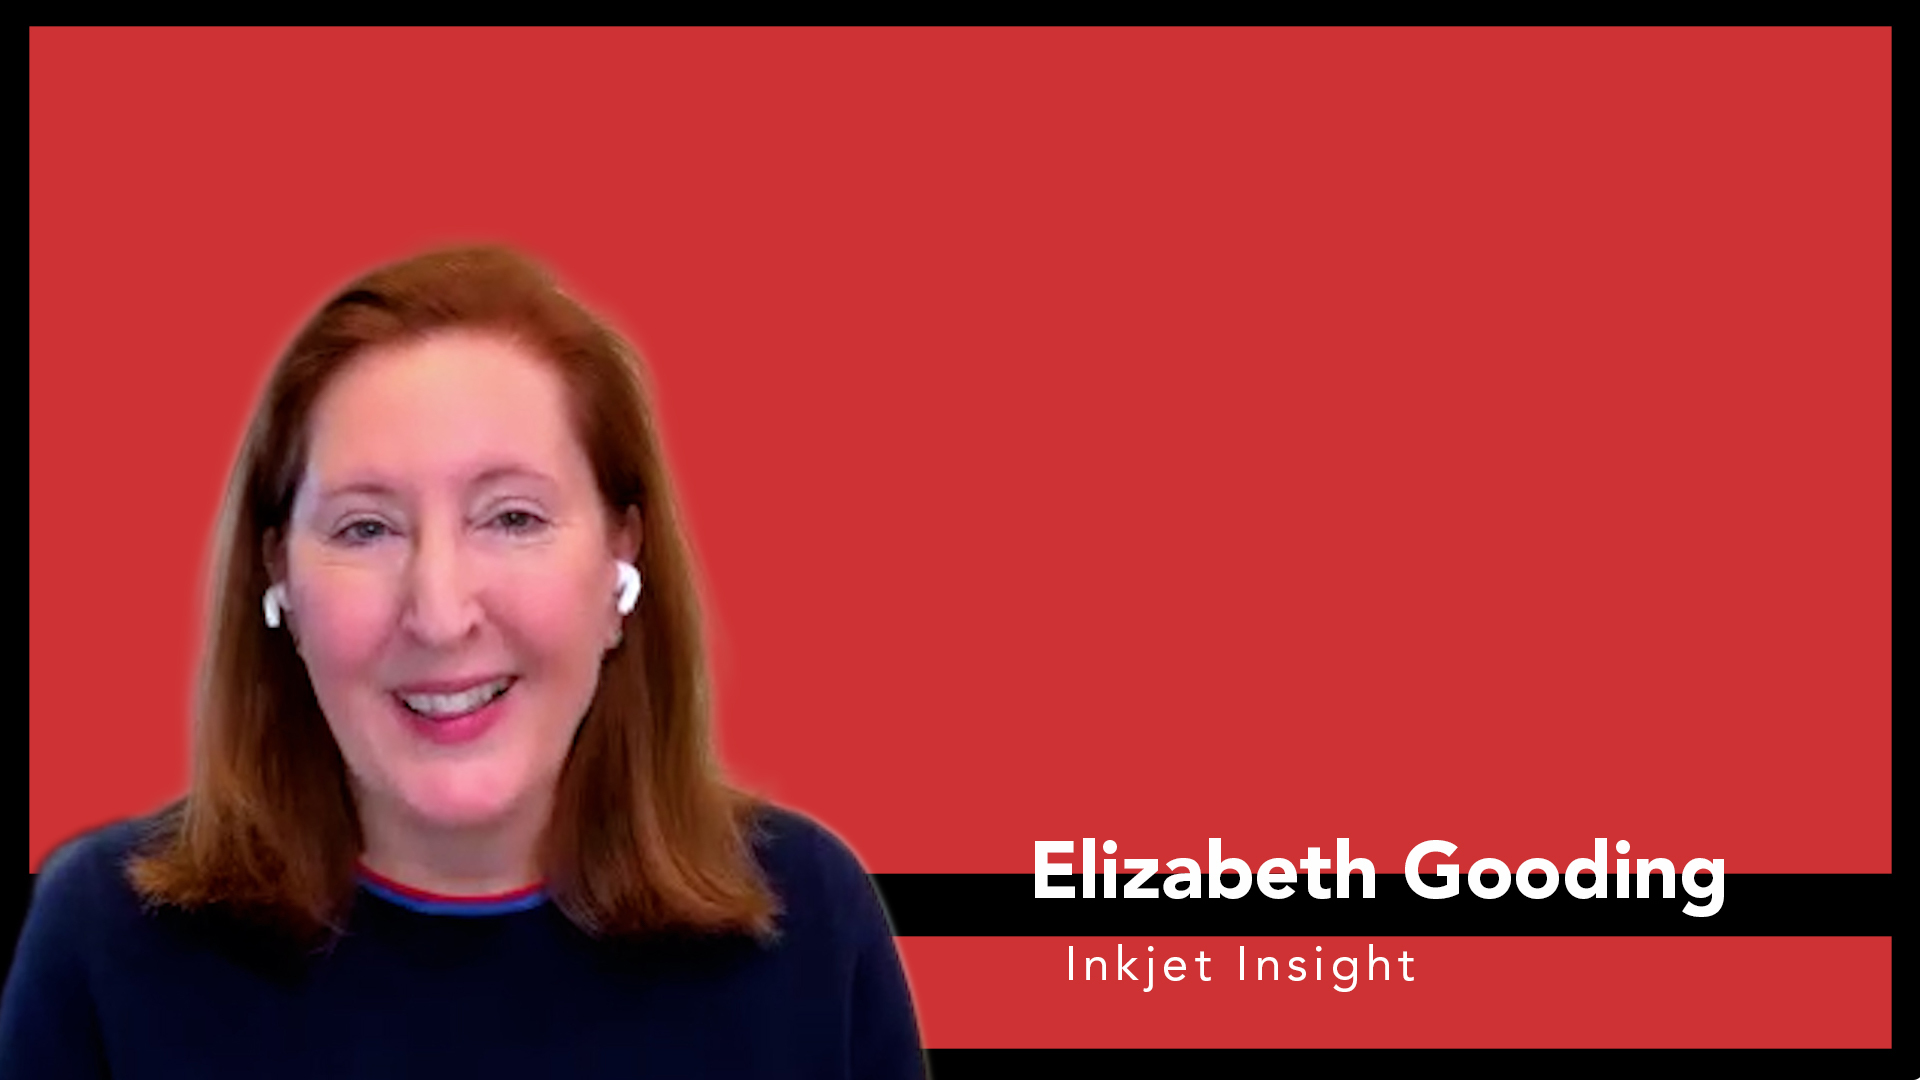 Elizabeth Gooding Offers Inkjet Insights